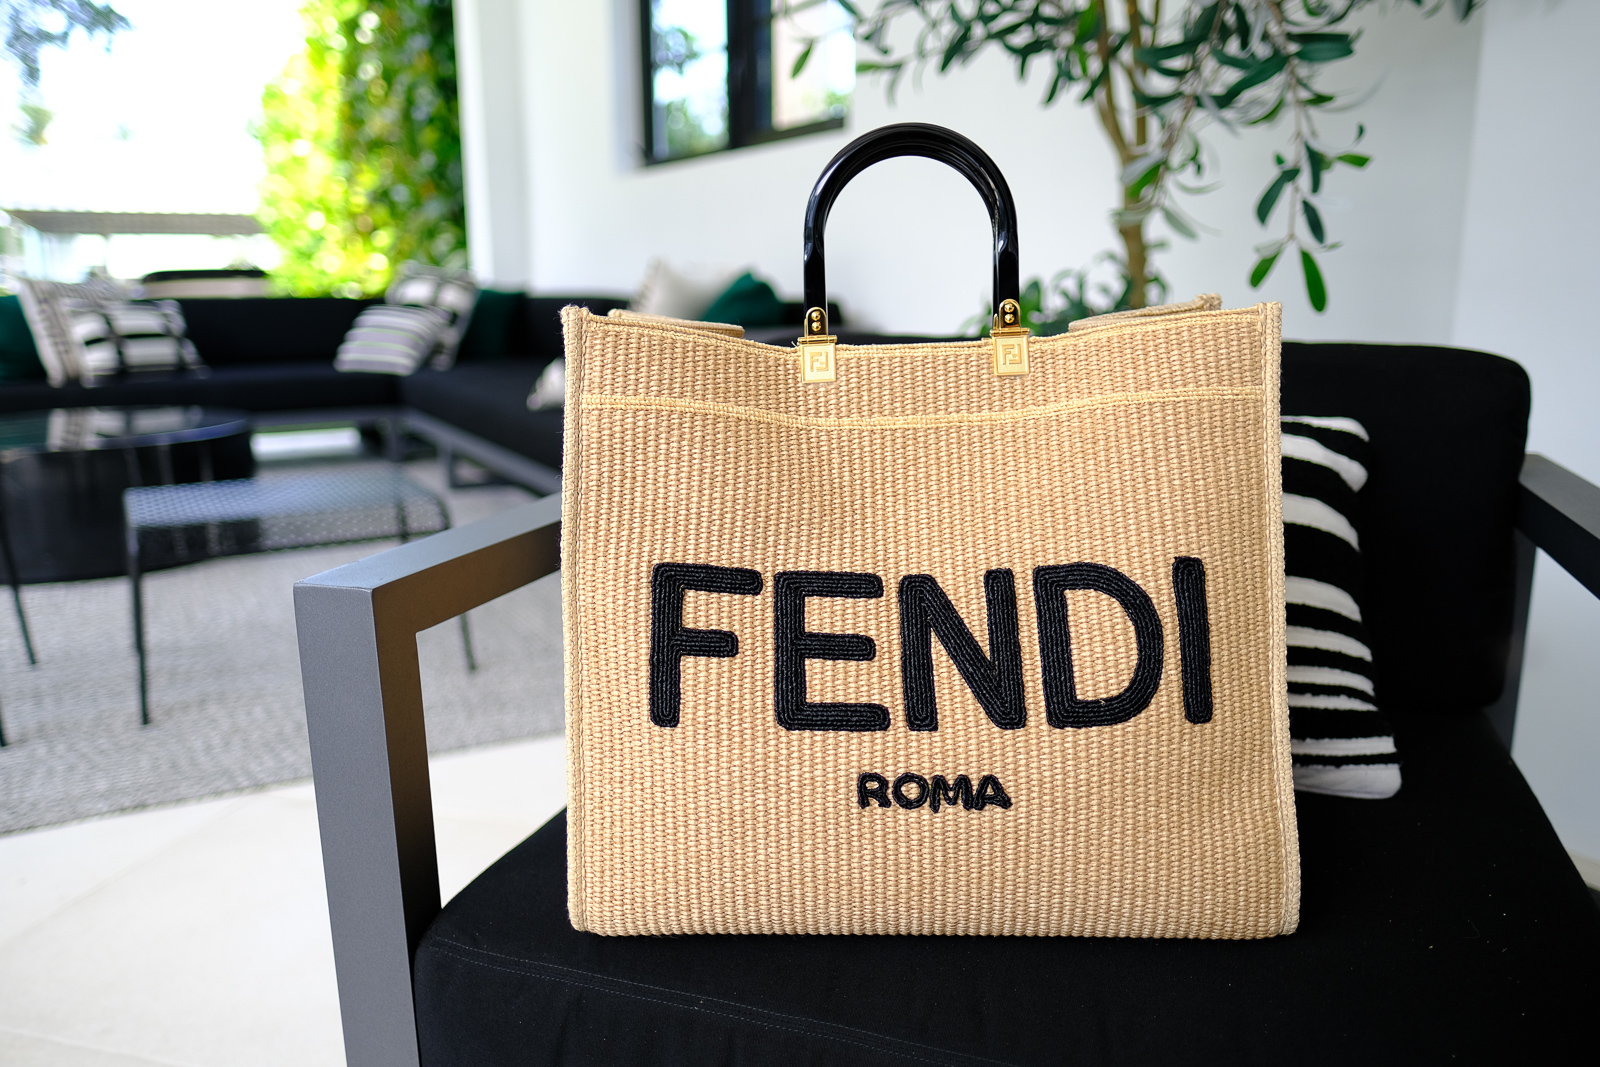 Fendi Sunshine Medium Bag in Natural